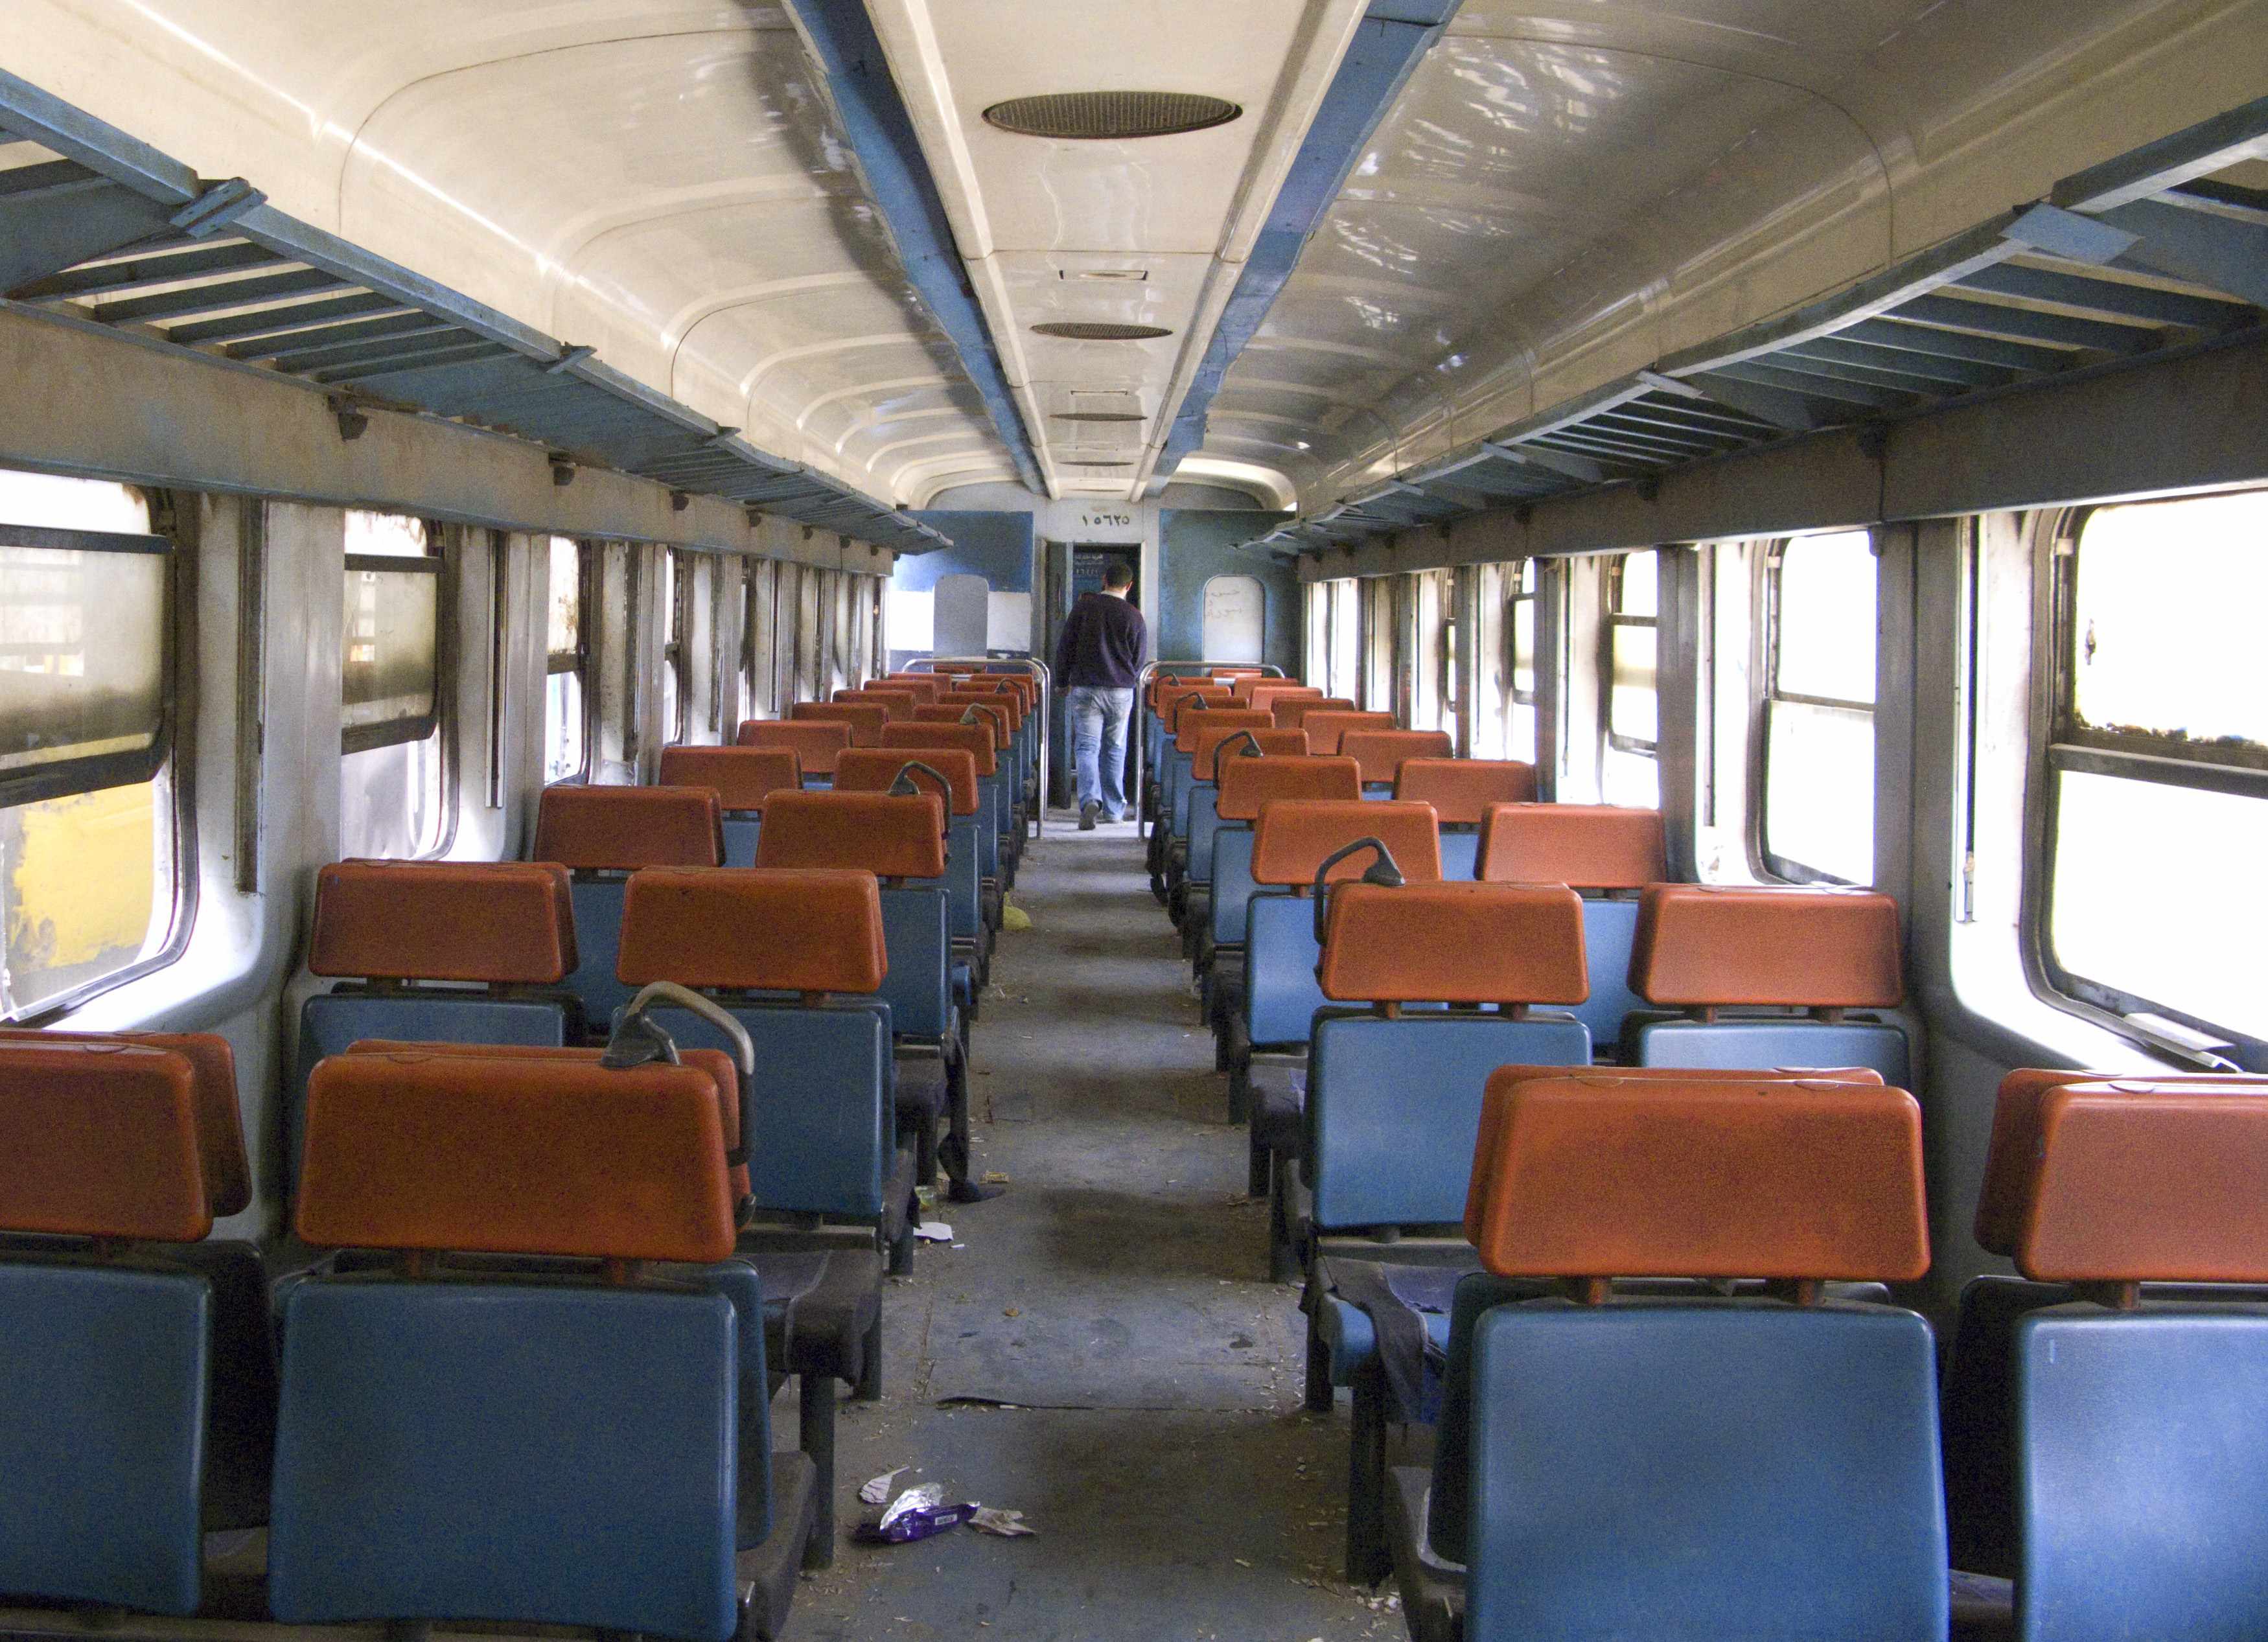 Railway service provides alternative transportation 